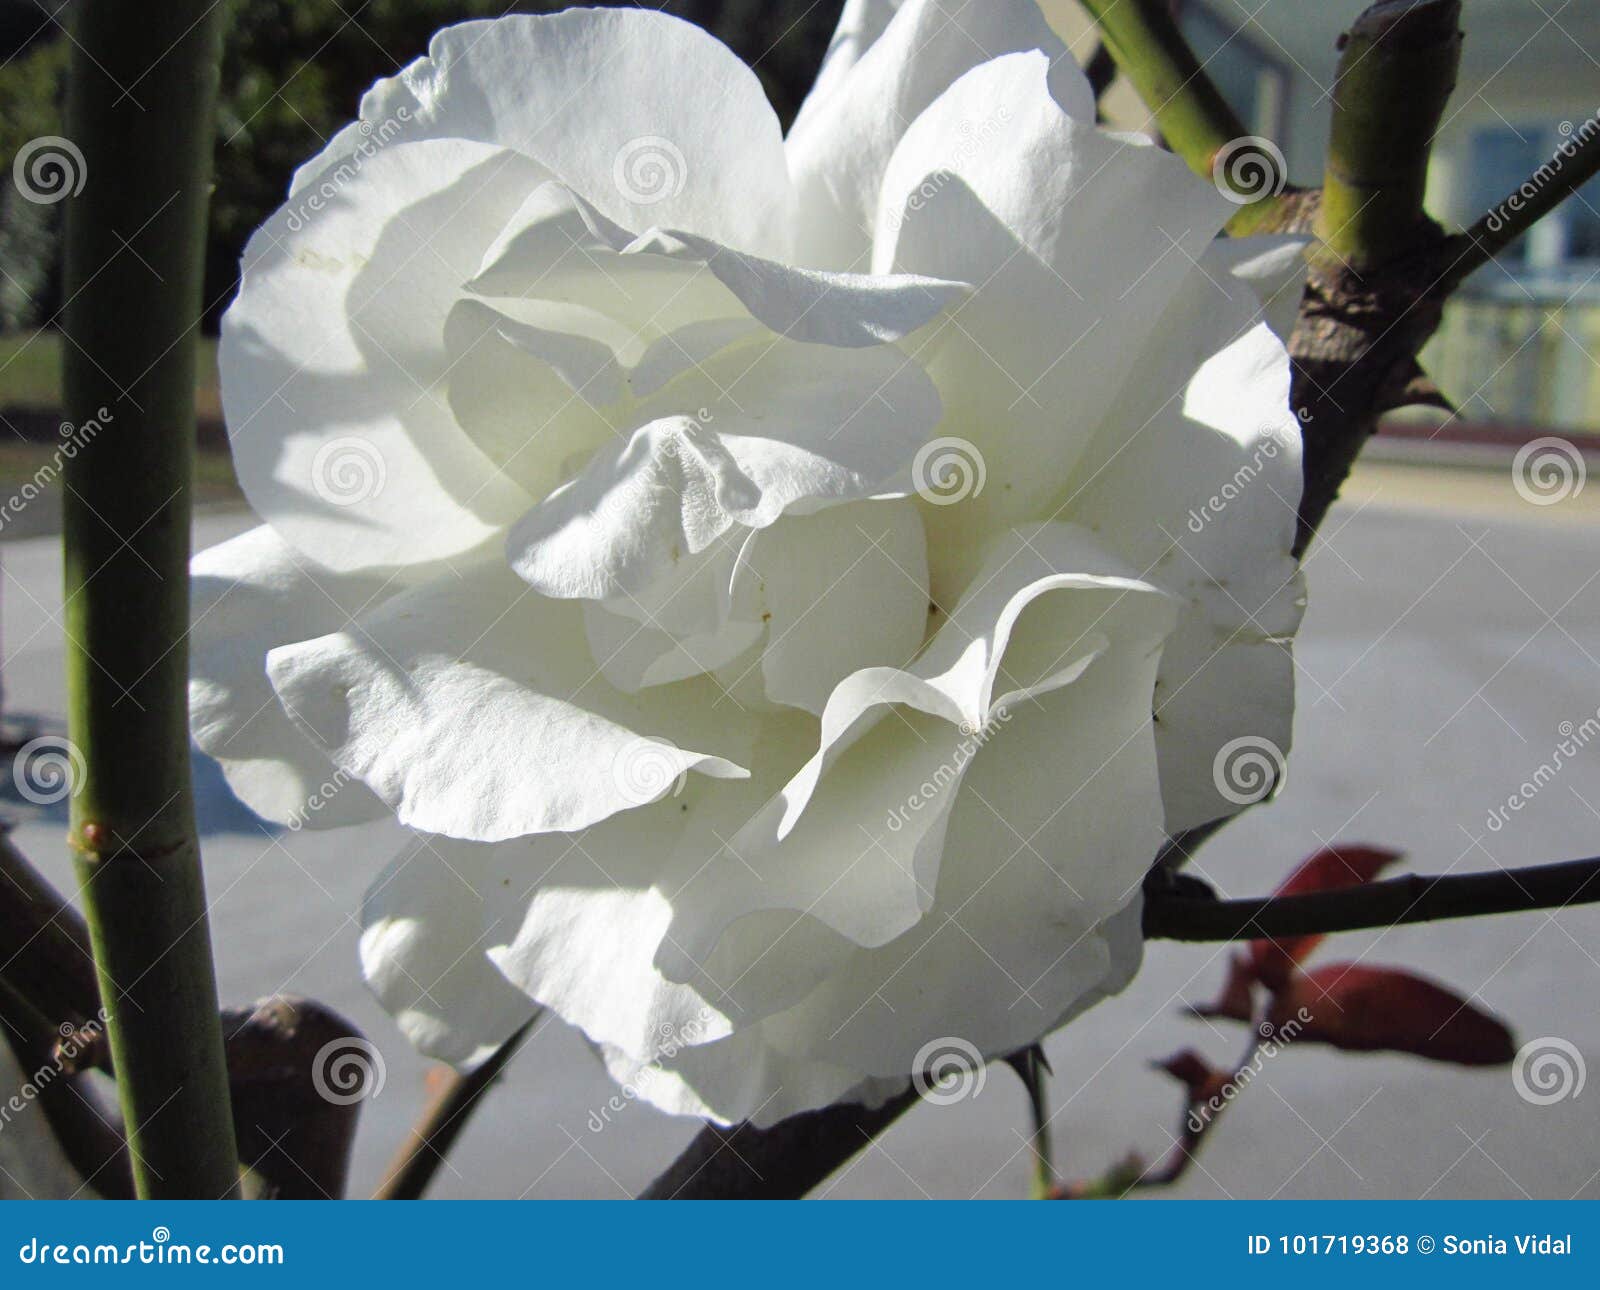 great white rose in padrÃÂ³n, galicia, spain